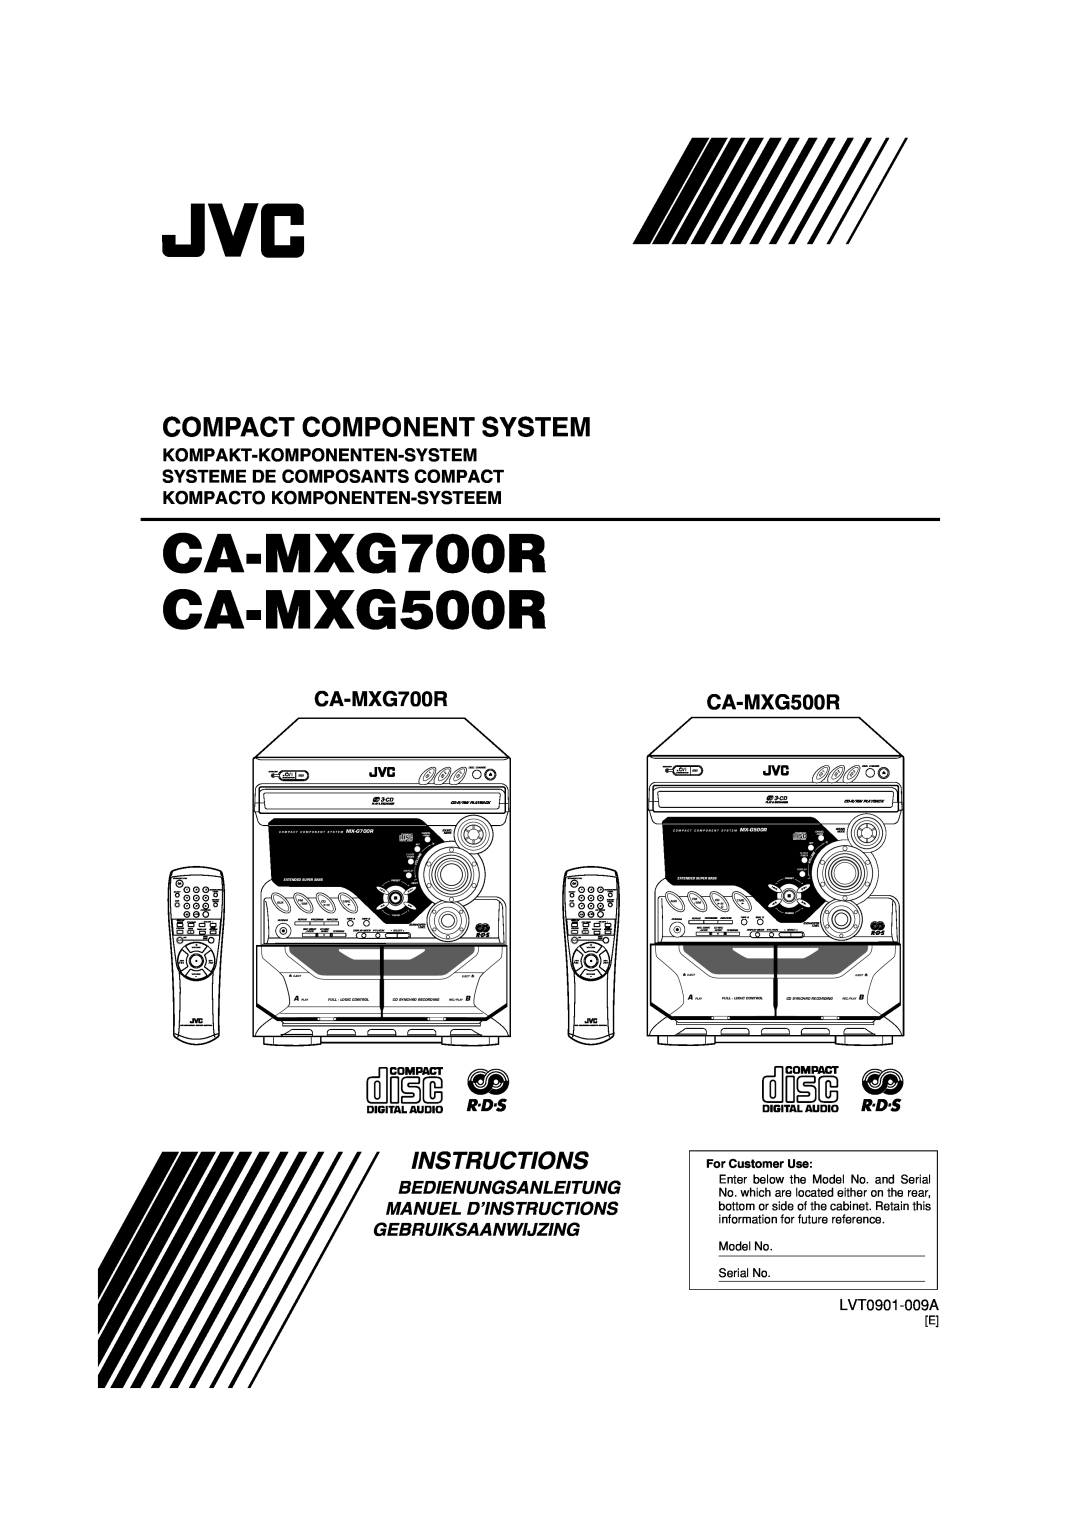 JVC manual CA-MXG700R CA-MXG500R, Compact Component System, Bedienungsanleitung Manuel D’Instructions, 3 CD 